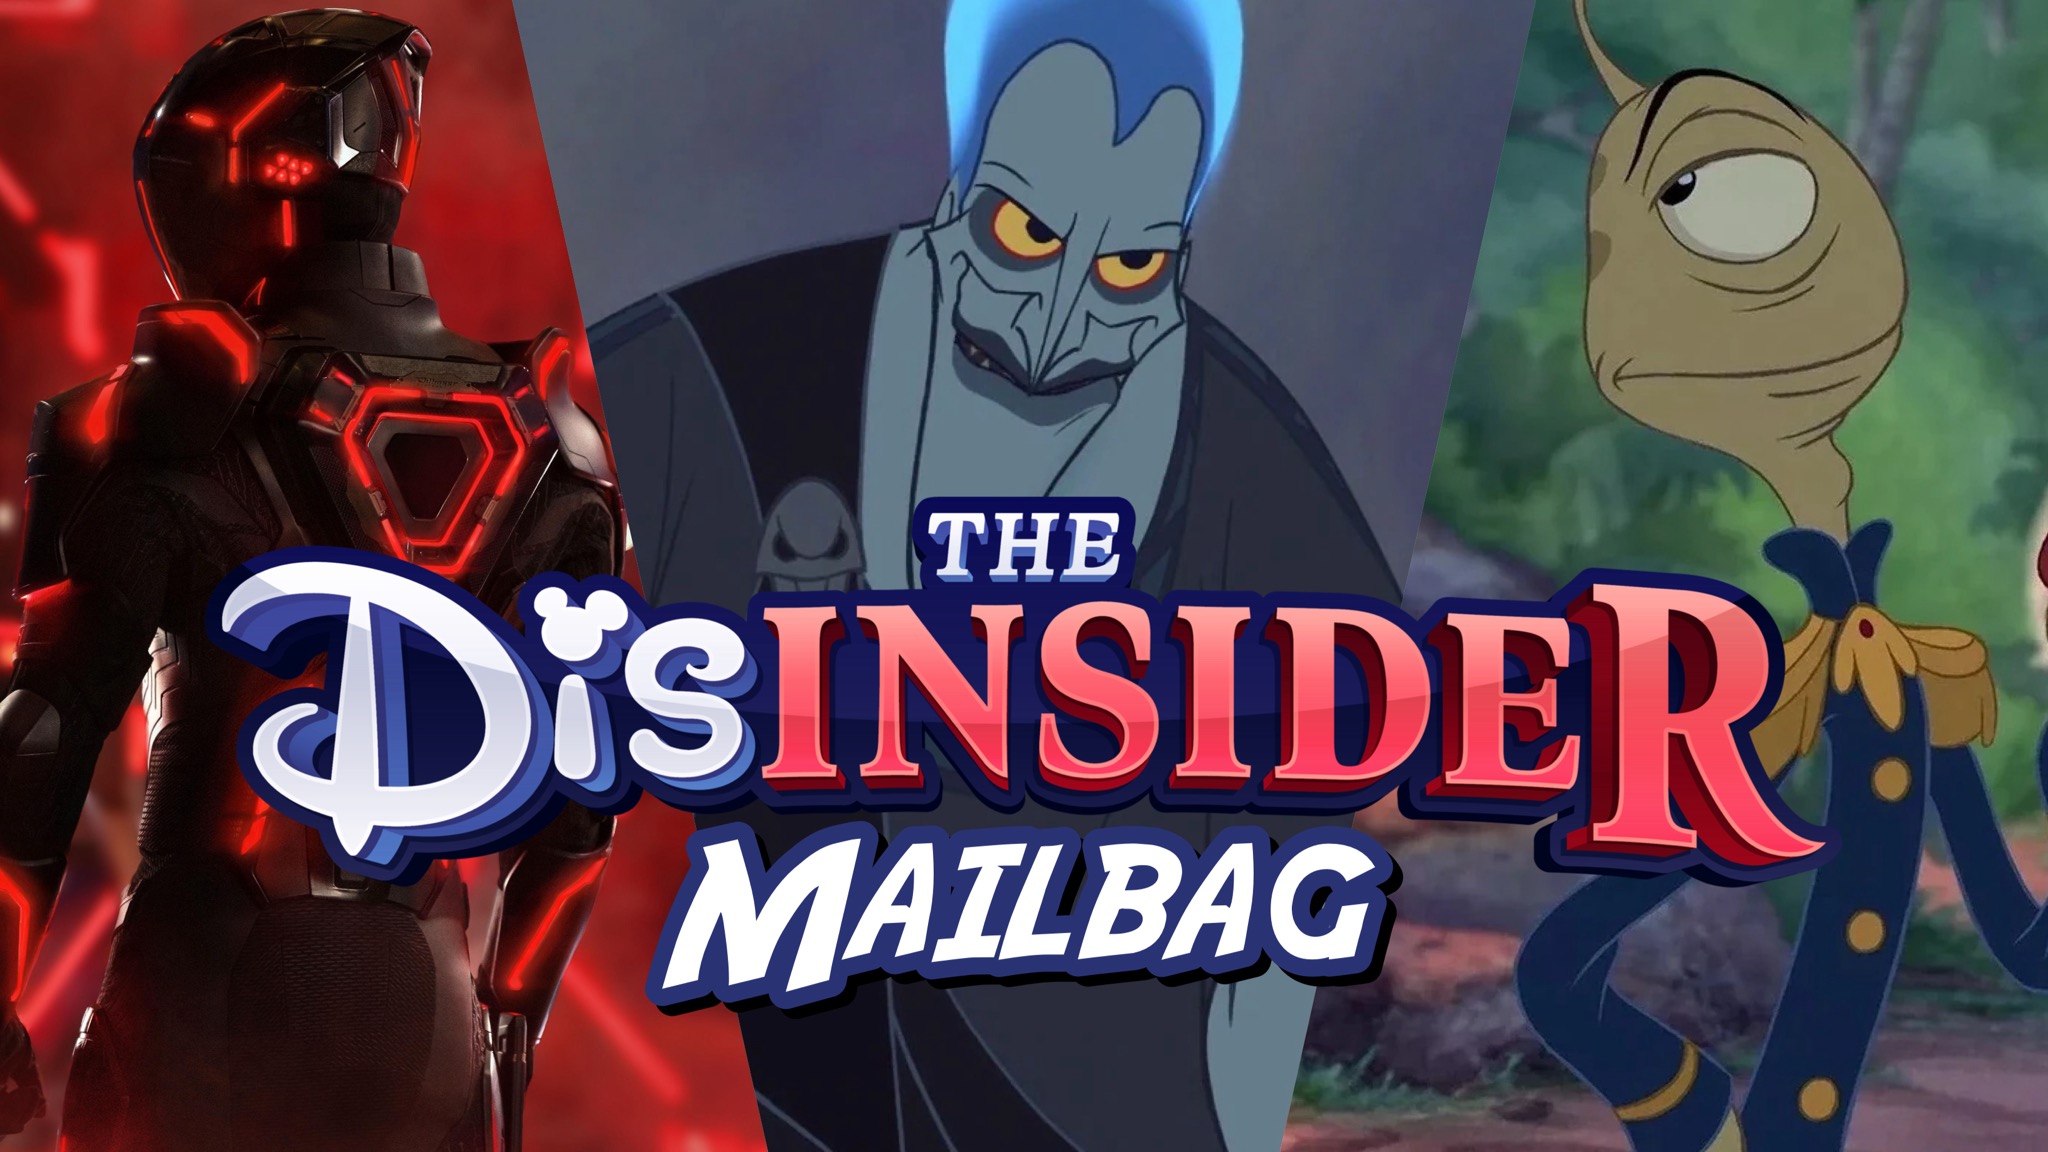 The DisInsider Mailbag – Tron, Hercules, and Lilo & Stitch